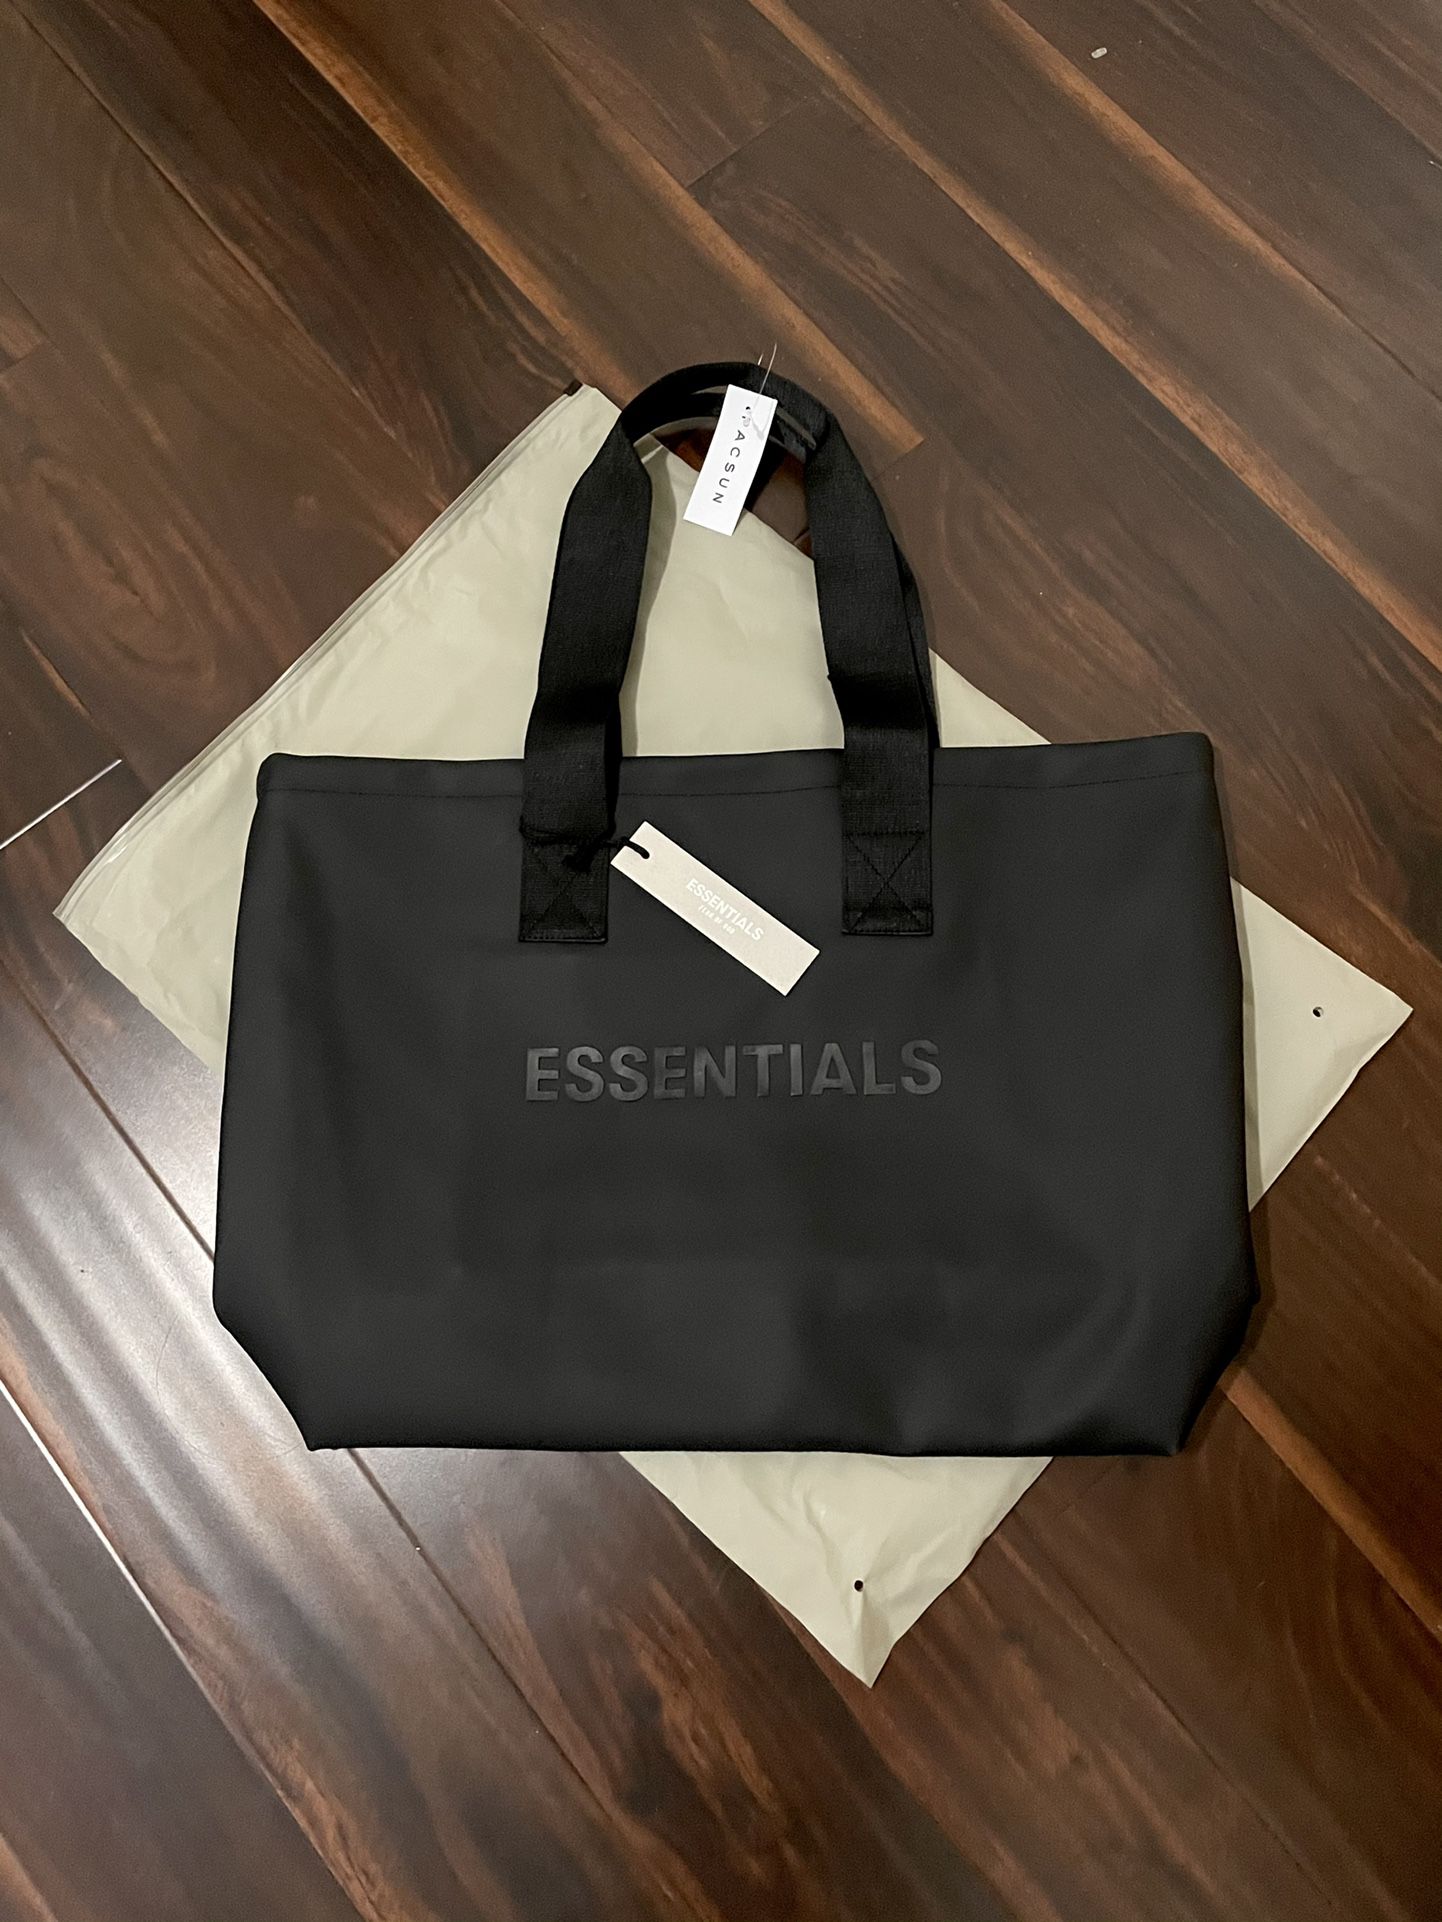 Essentials Tote bag